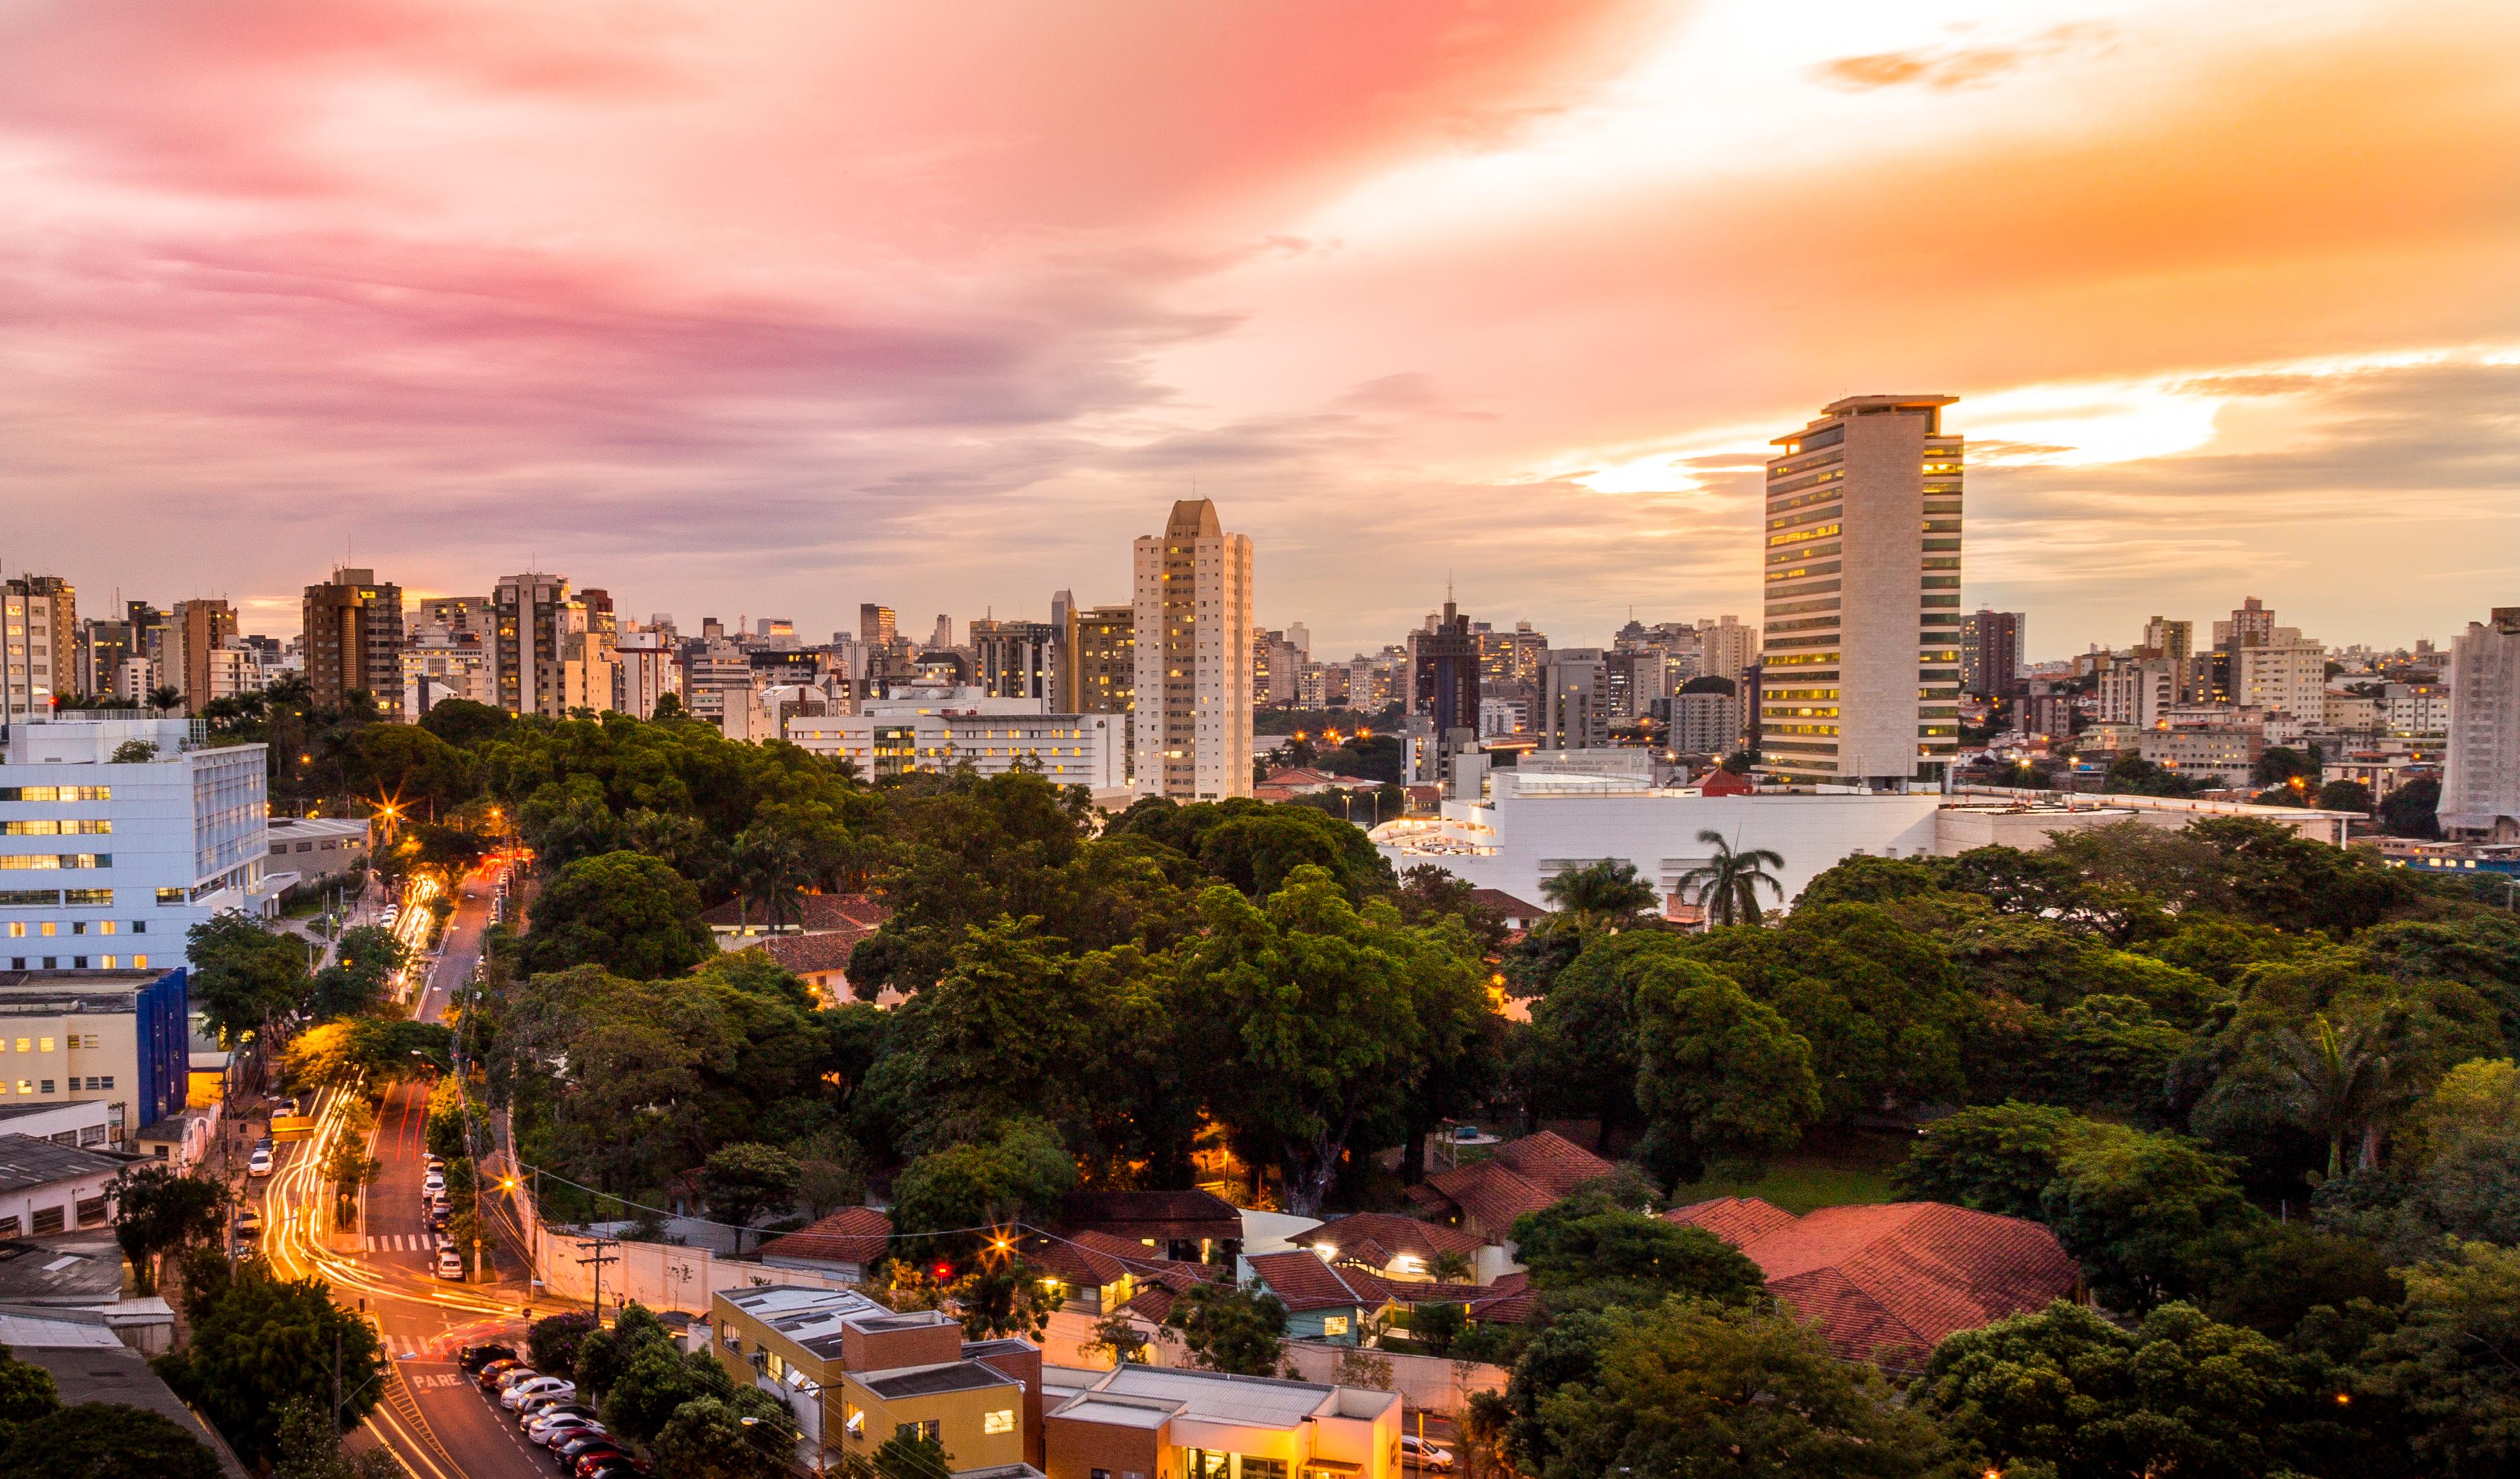 The Belo Horizonte city, cover photo